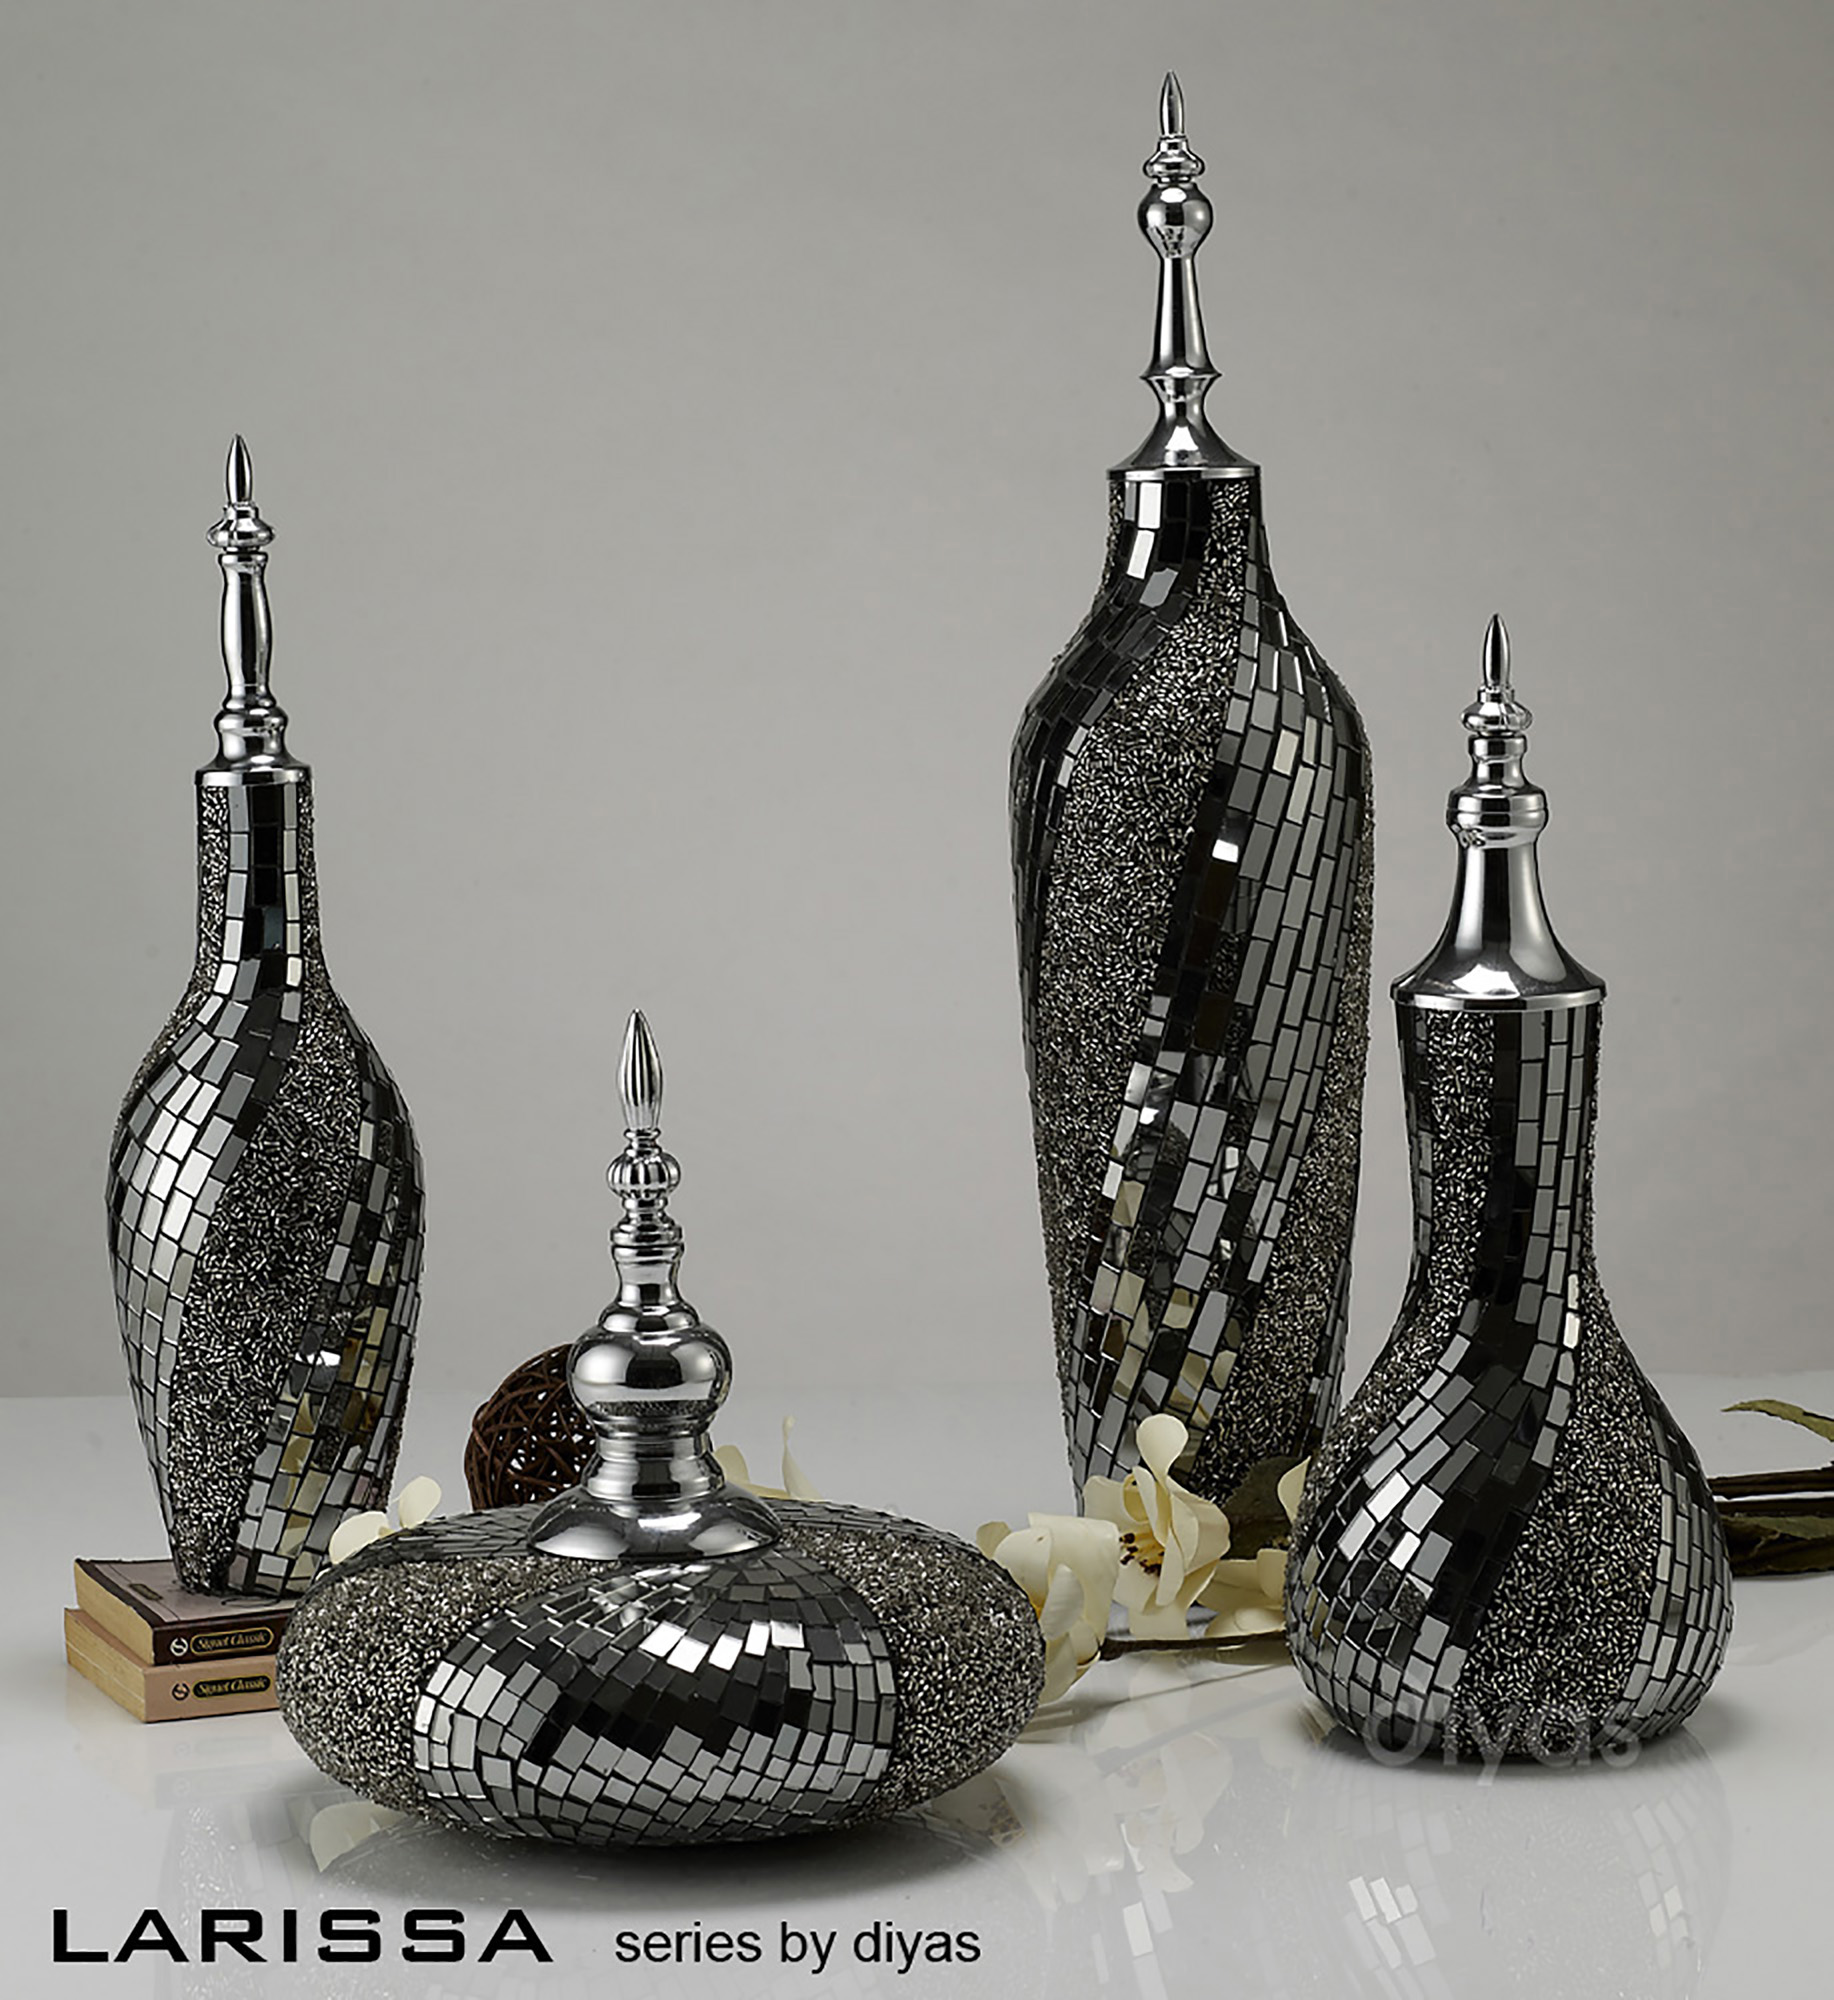 Larissa Mosaic Art Glassware Diyas Home Ornaments